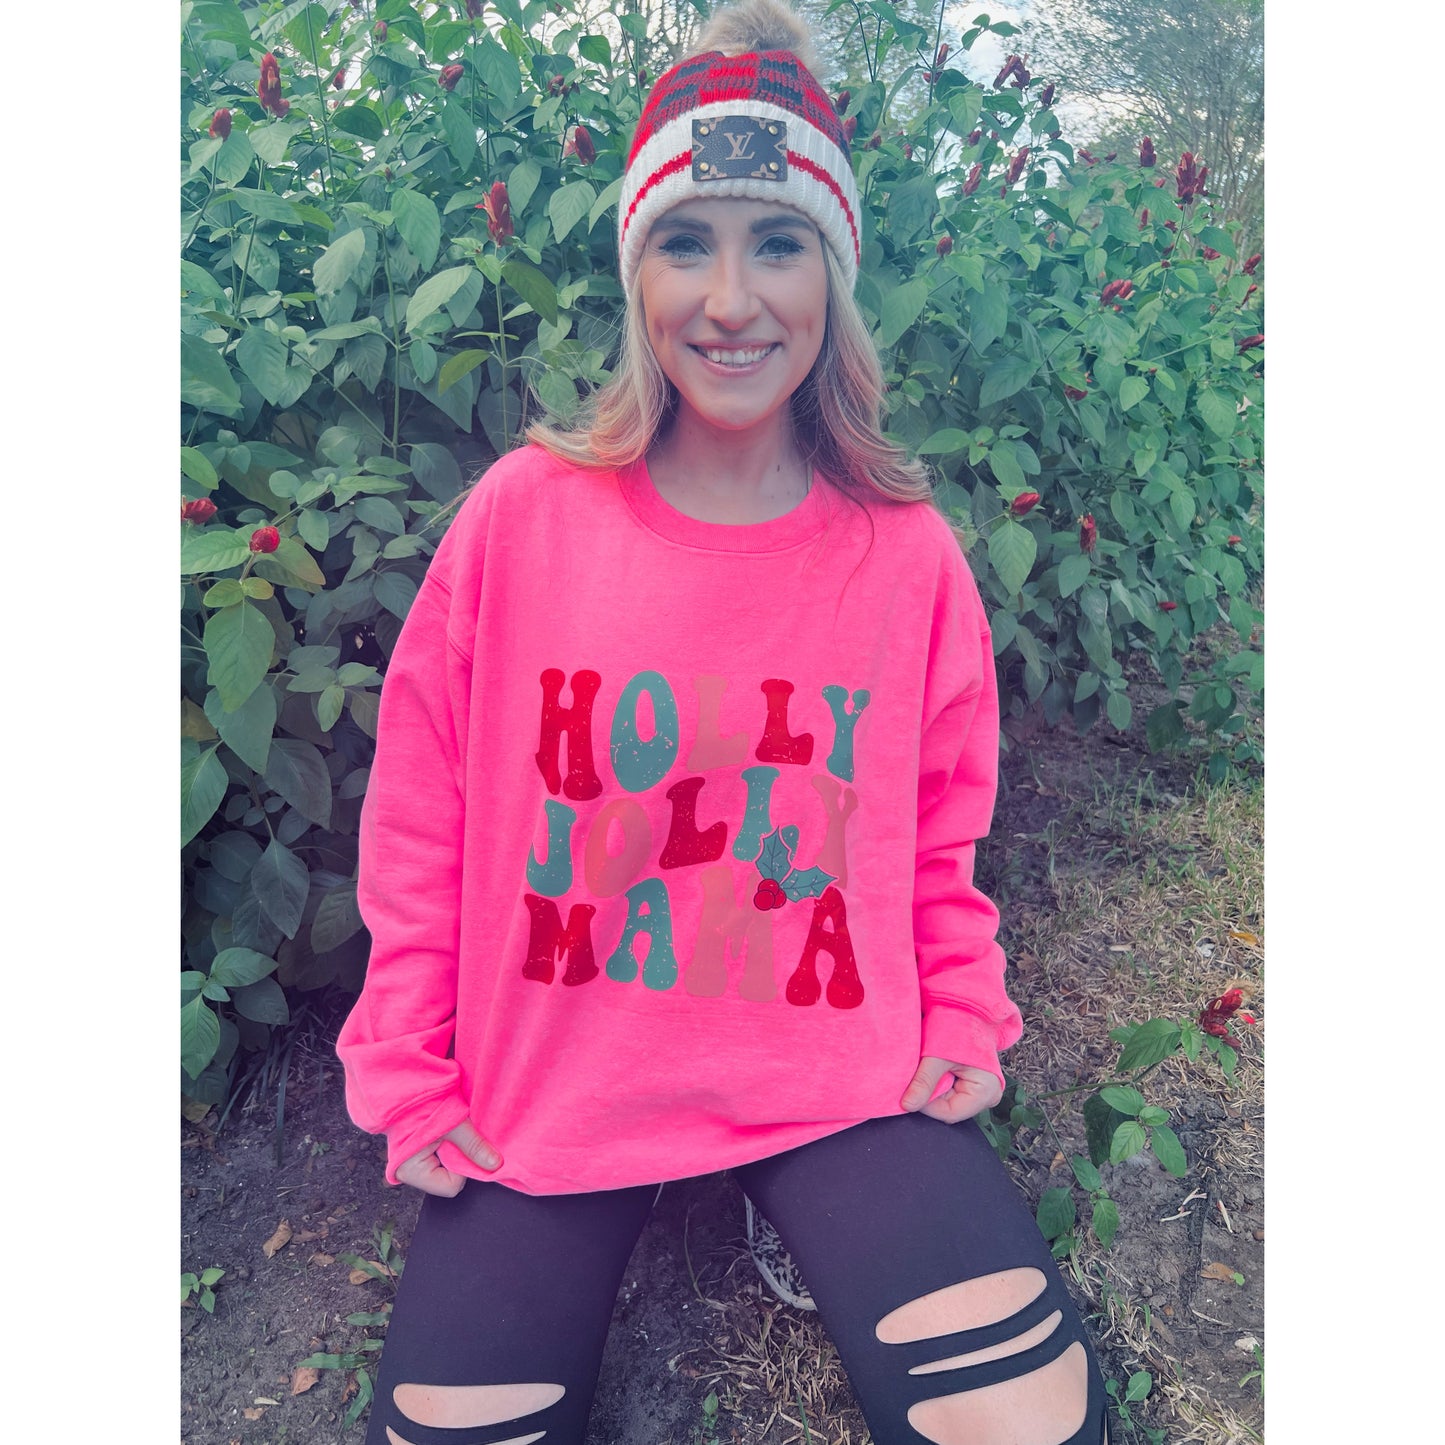 Holly Jolly Mama | Neon Pink Sweatshirt